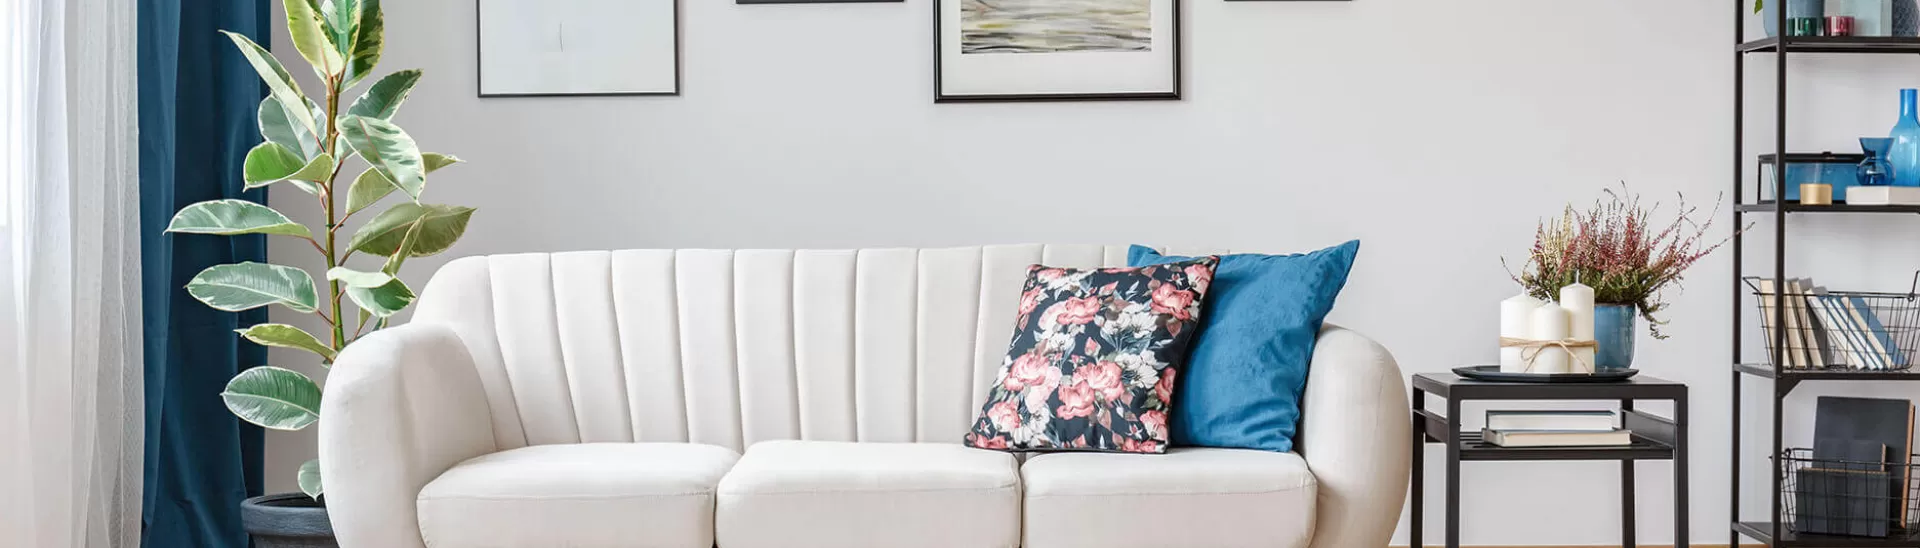 10 Most Popular Living Room Paint Ideas